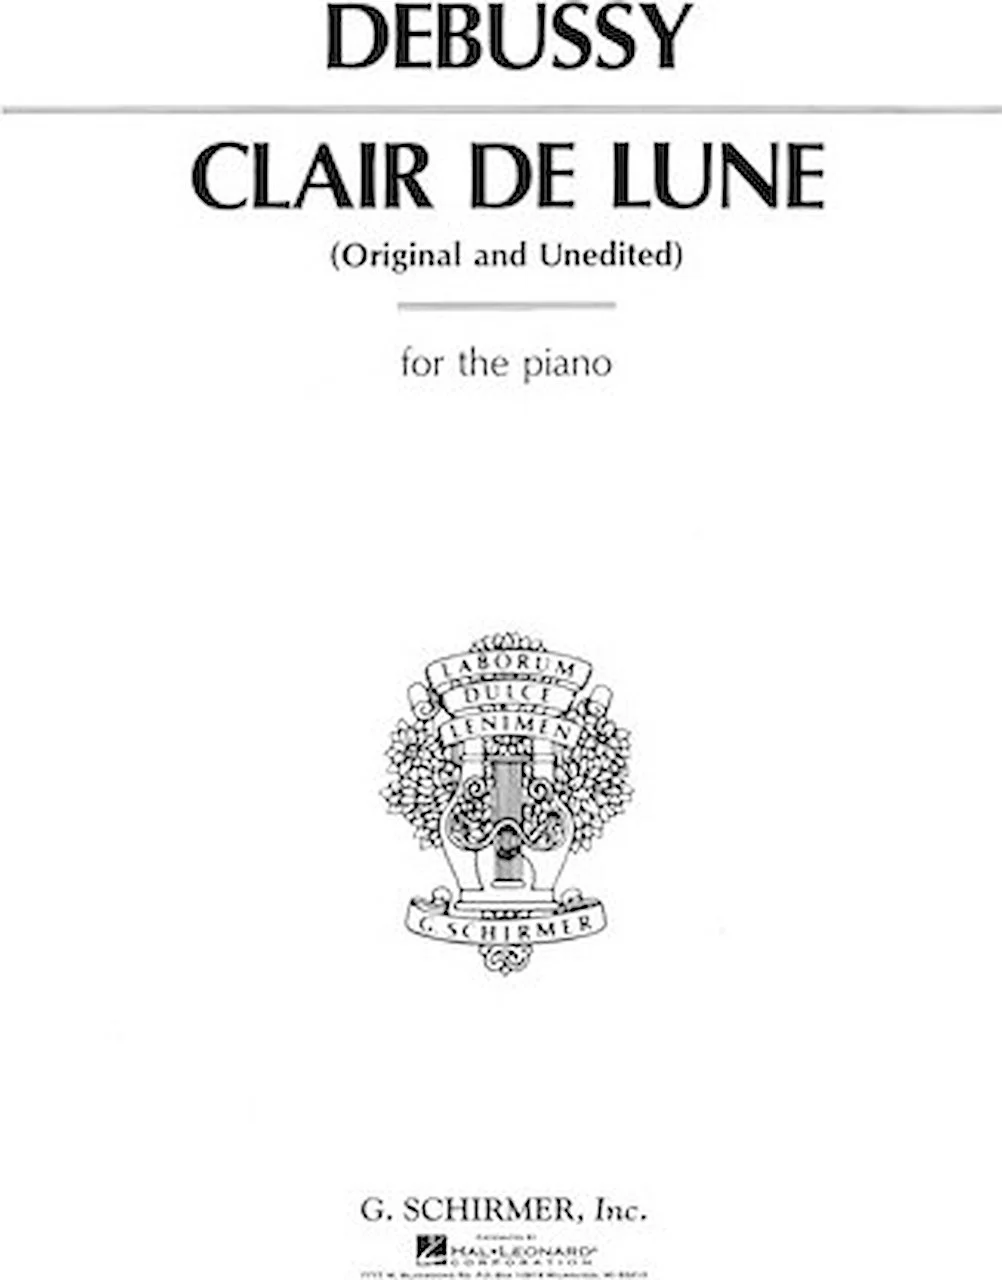 Clair de Lune | Capital Music Gear